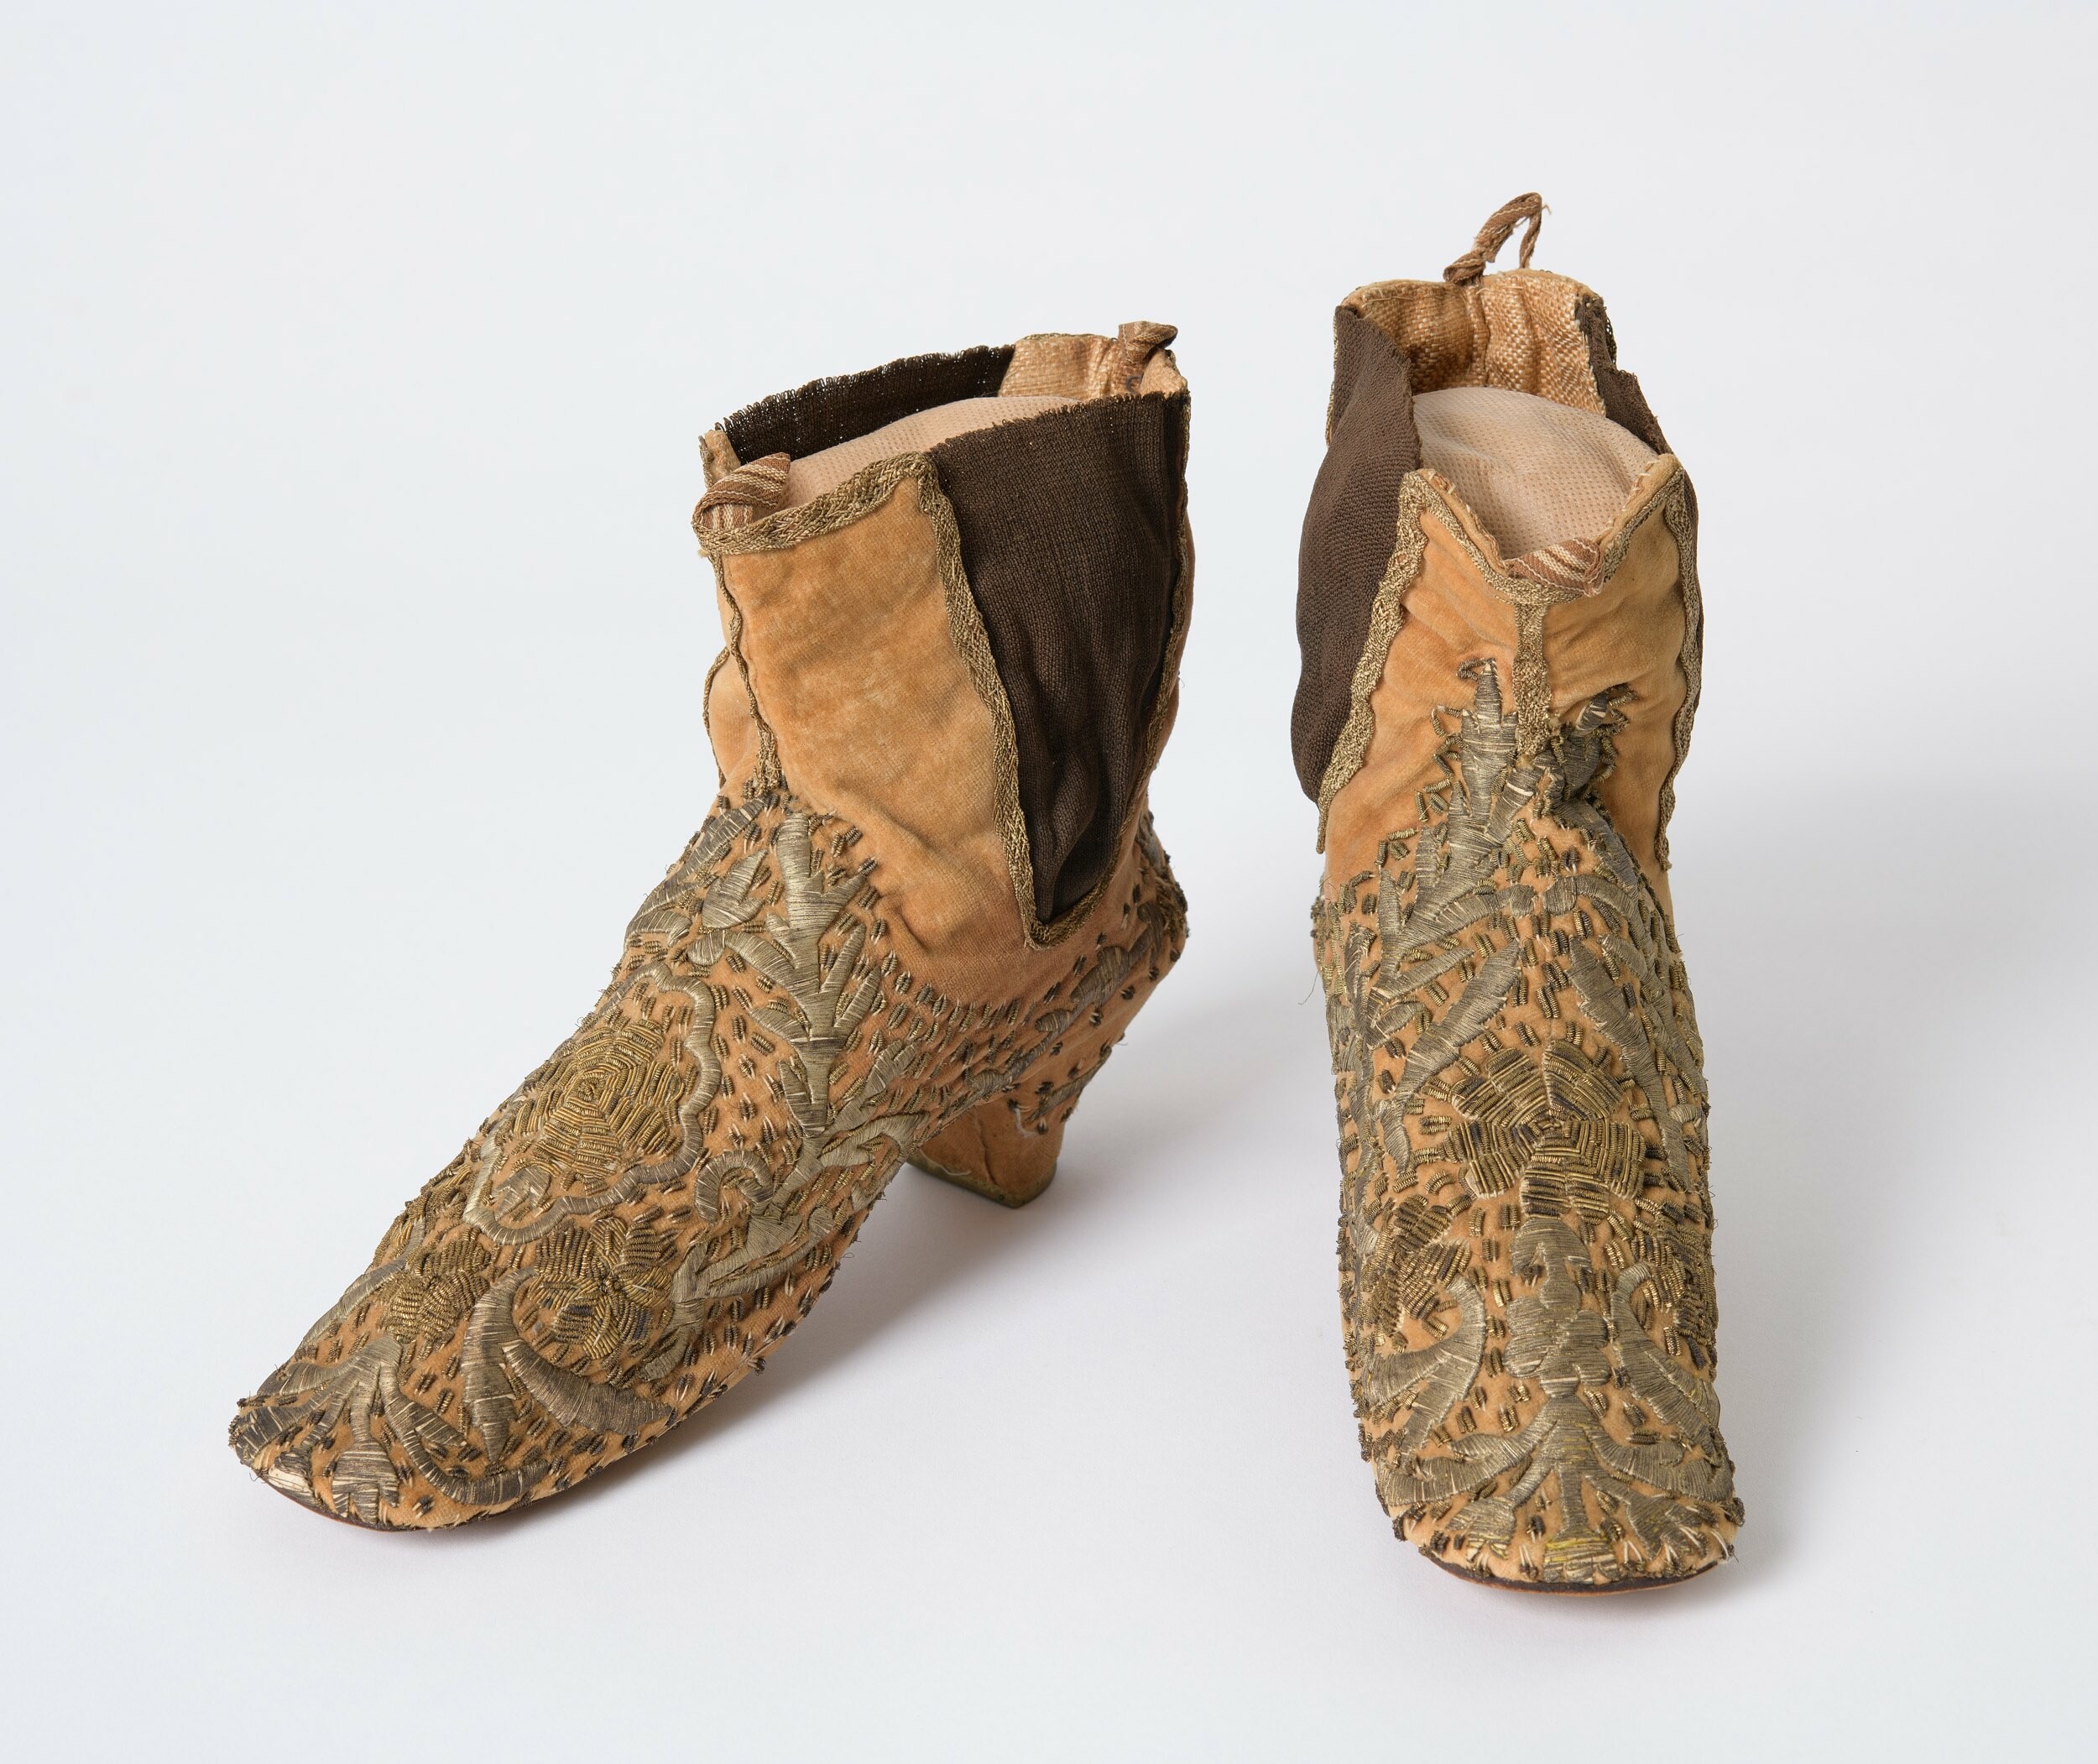 Cipő (Laczkó Dezső Múzeum CC BY-NC-SA)